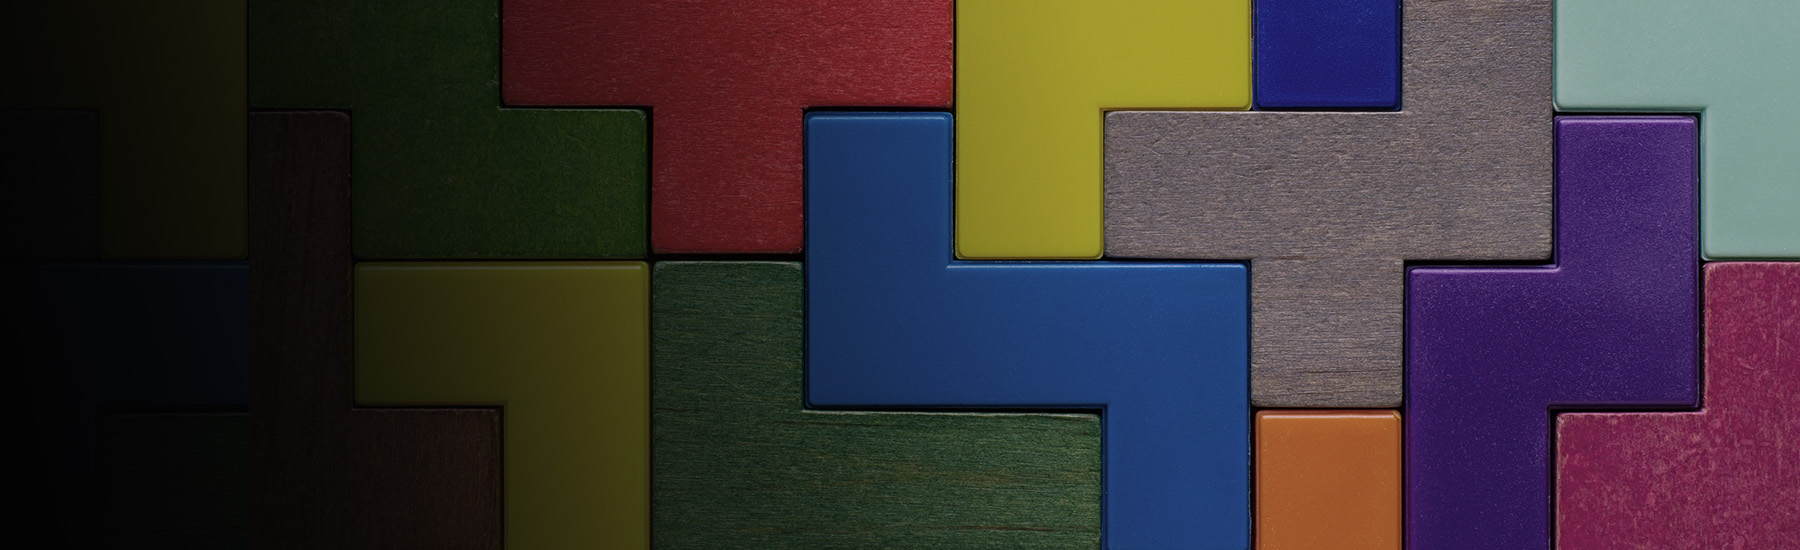 A Tetris-style grid of multi-color blocks